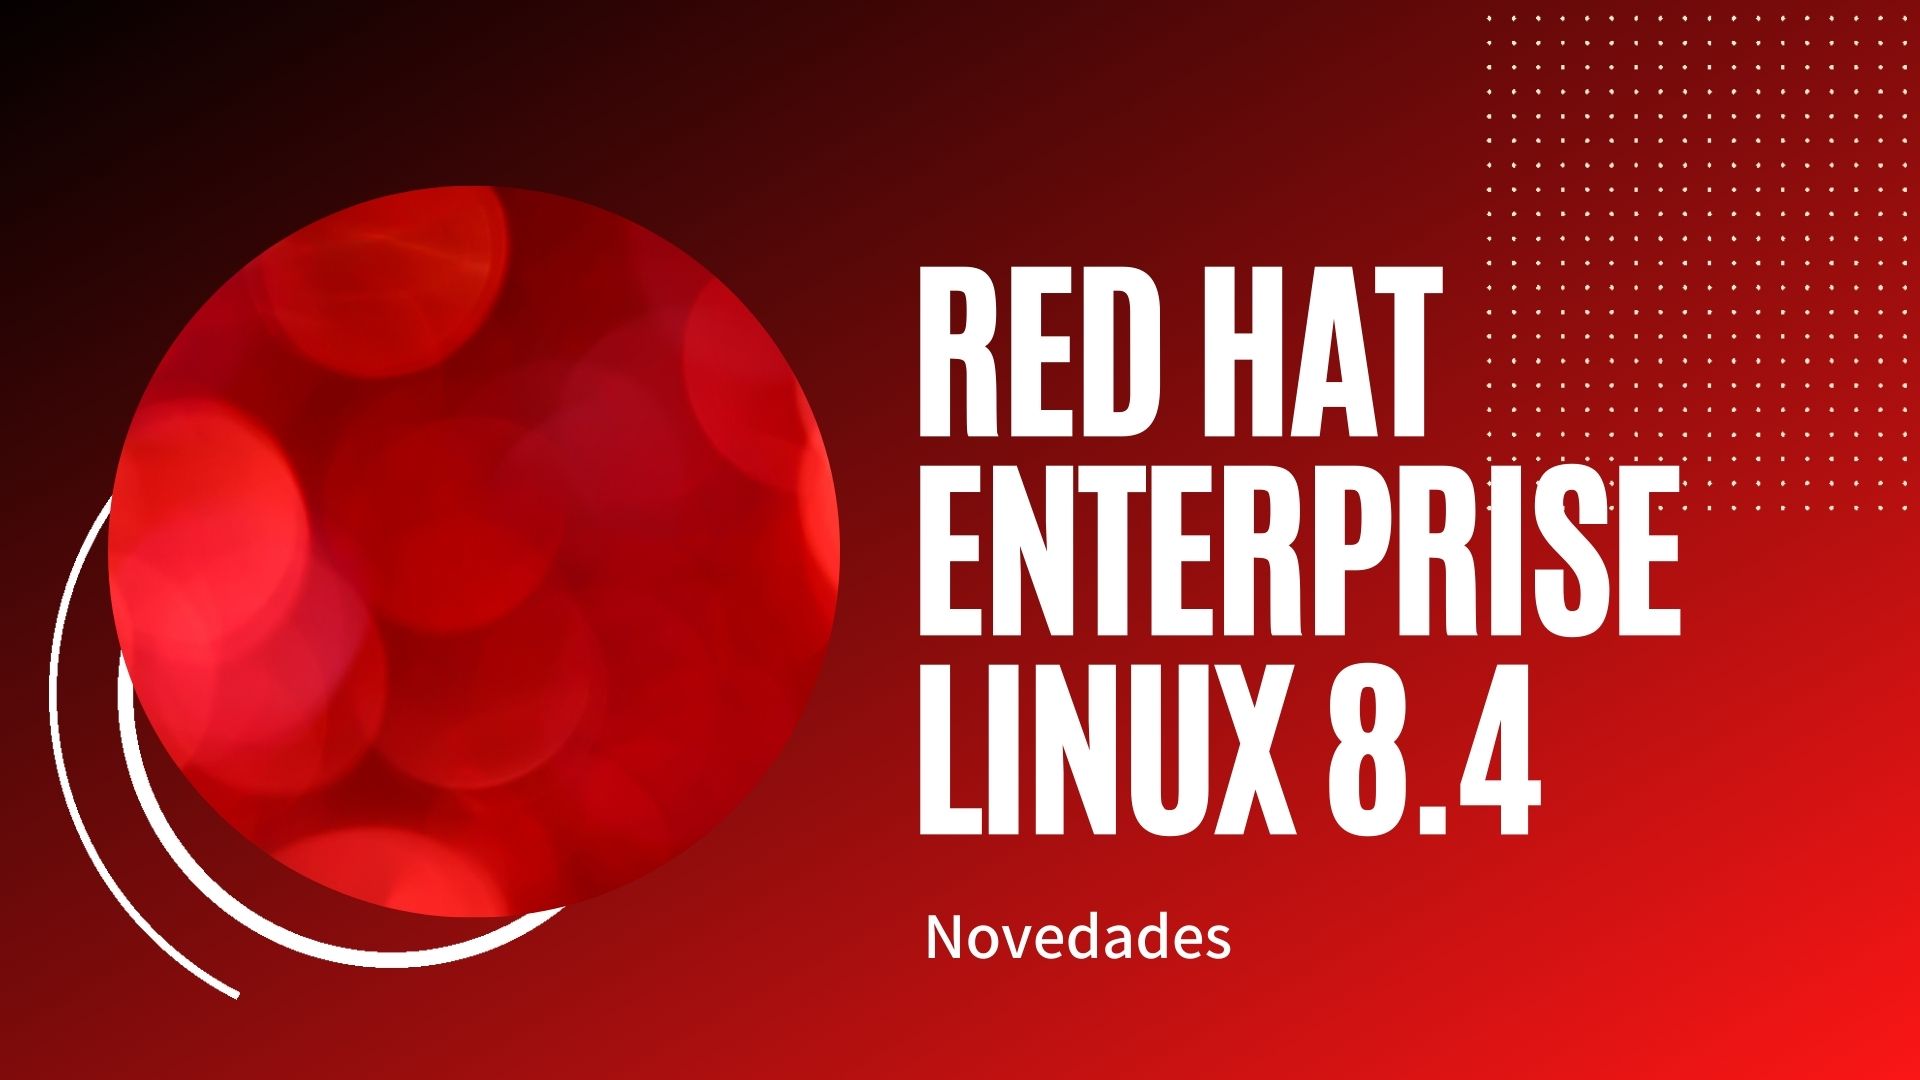 En este momento estás viendo Red Hat Enterprise Linux 8.4 